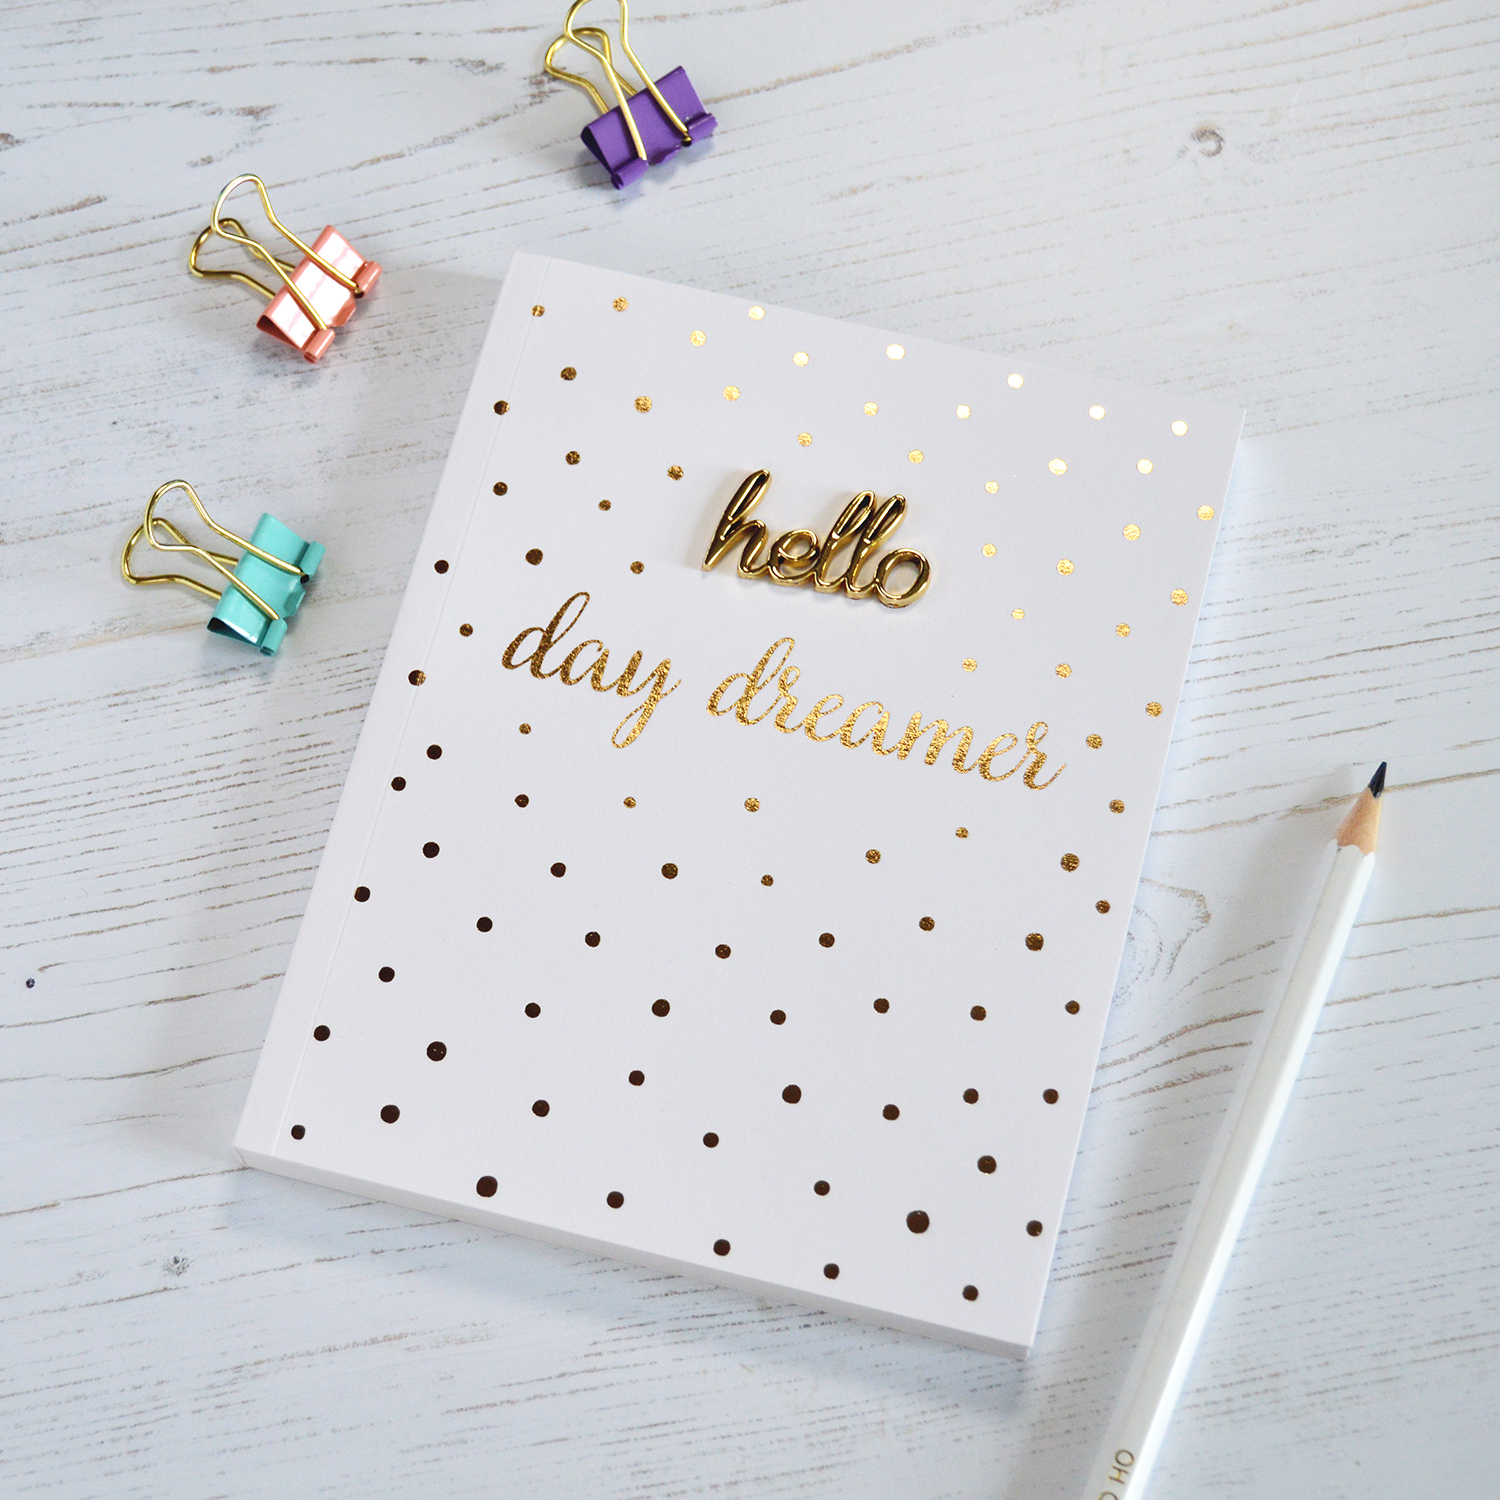 Hello Day Dreamer A6 Notebook